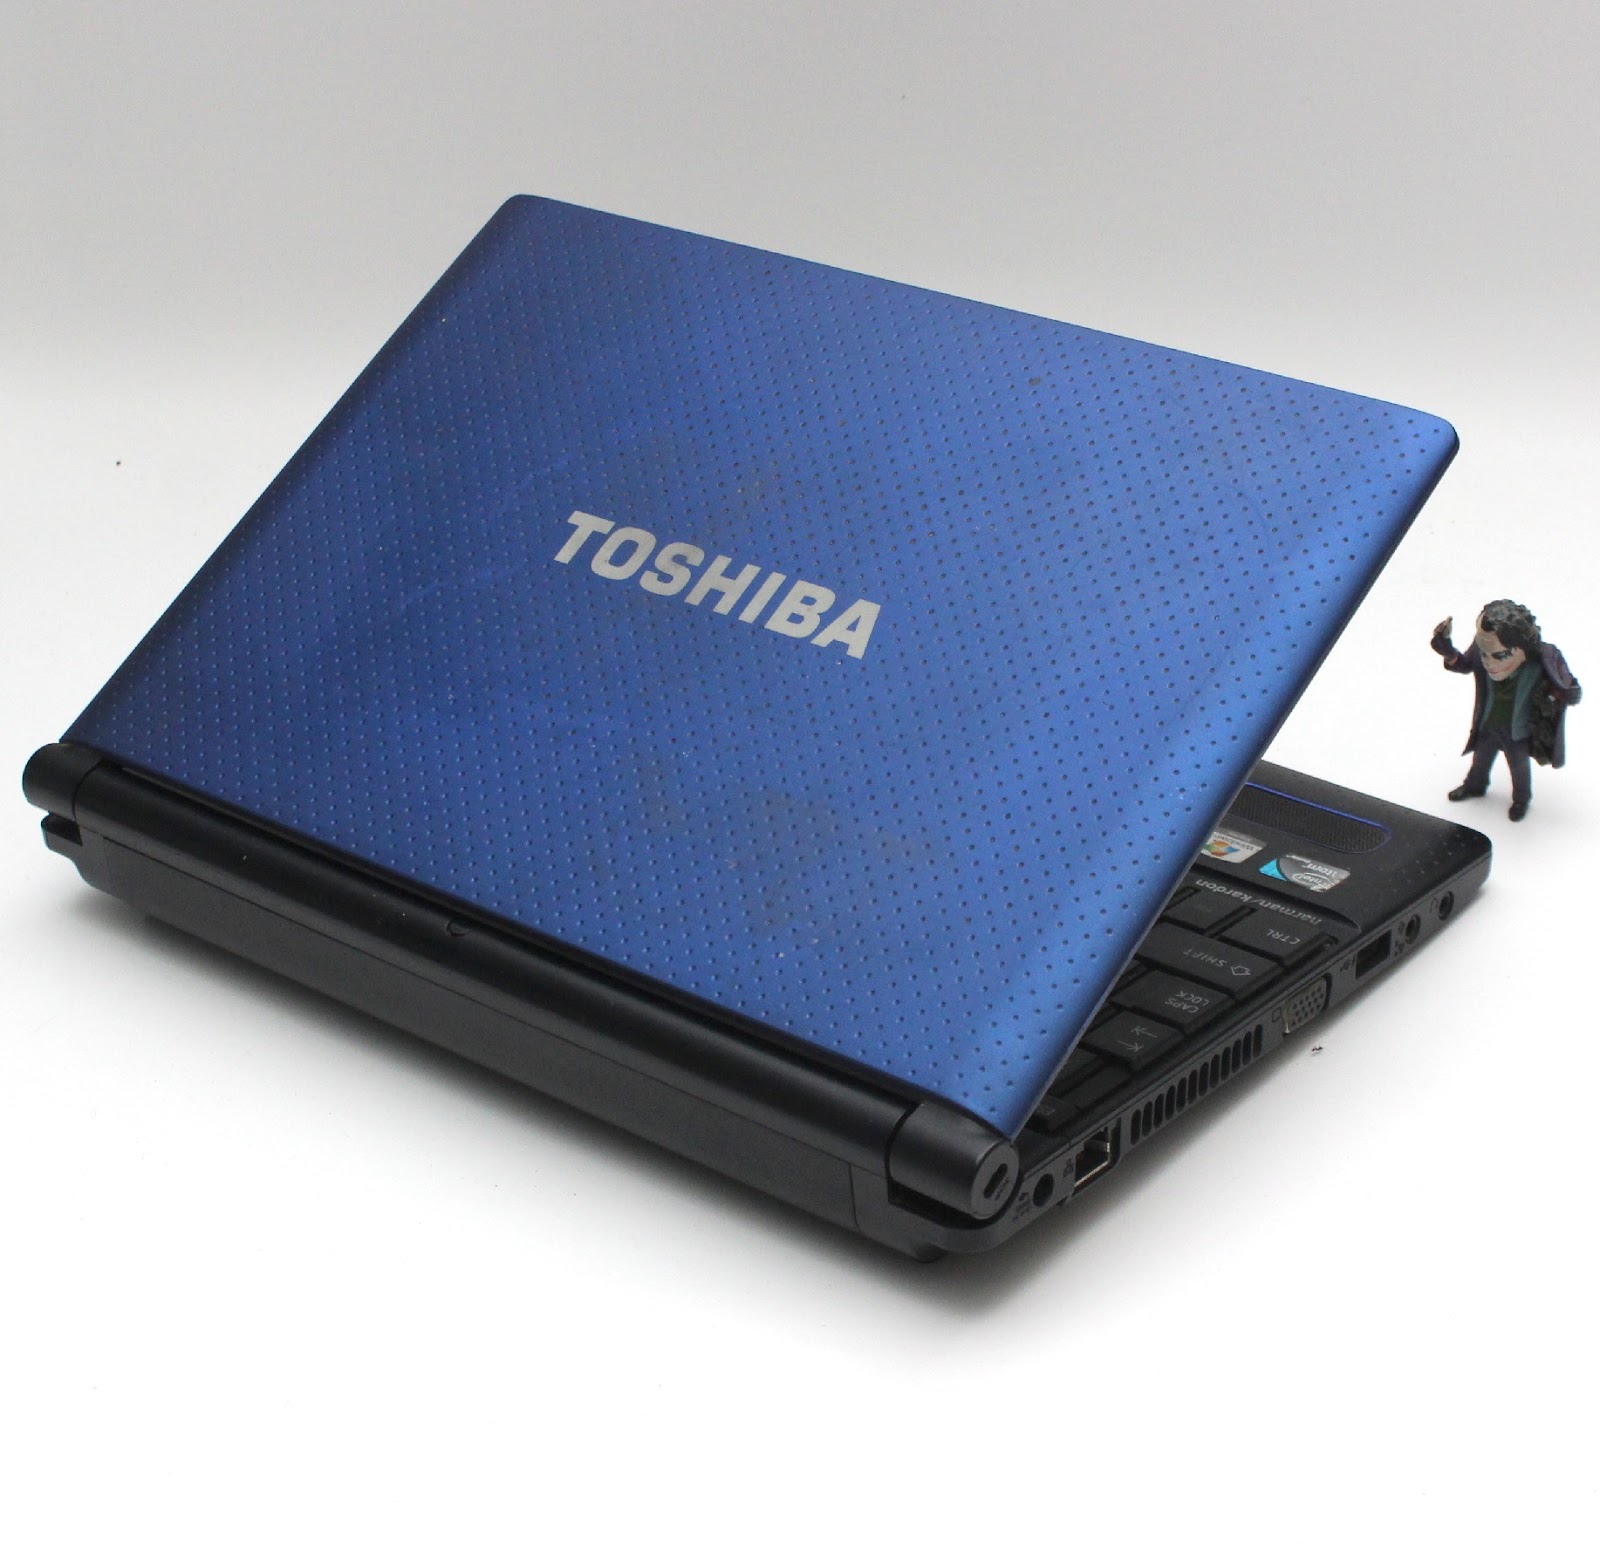 Toshiba nb520-11t. Ноутбук Toshiba nb100-12n. Ноутбук ASUS Atom n2600/2gb/HDD/Intel GMA 3600/10.1''@1024*600 – 4000р. Toshiba nb520-11t разборка.